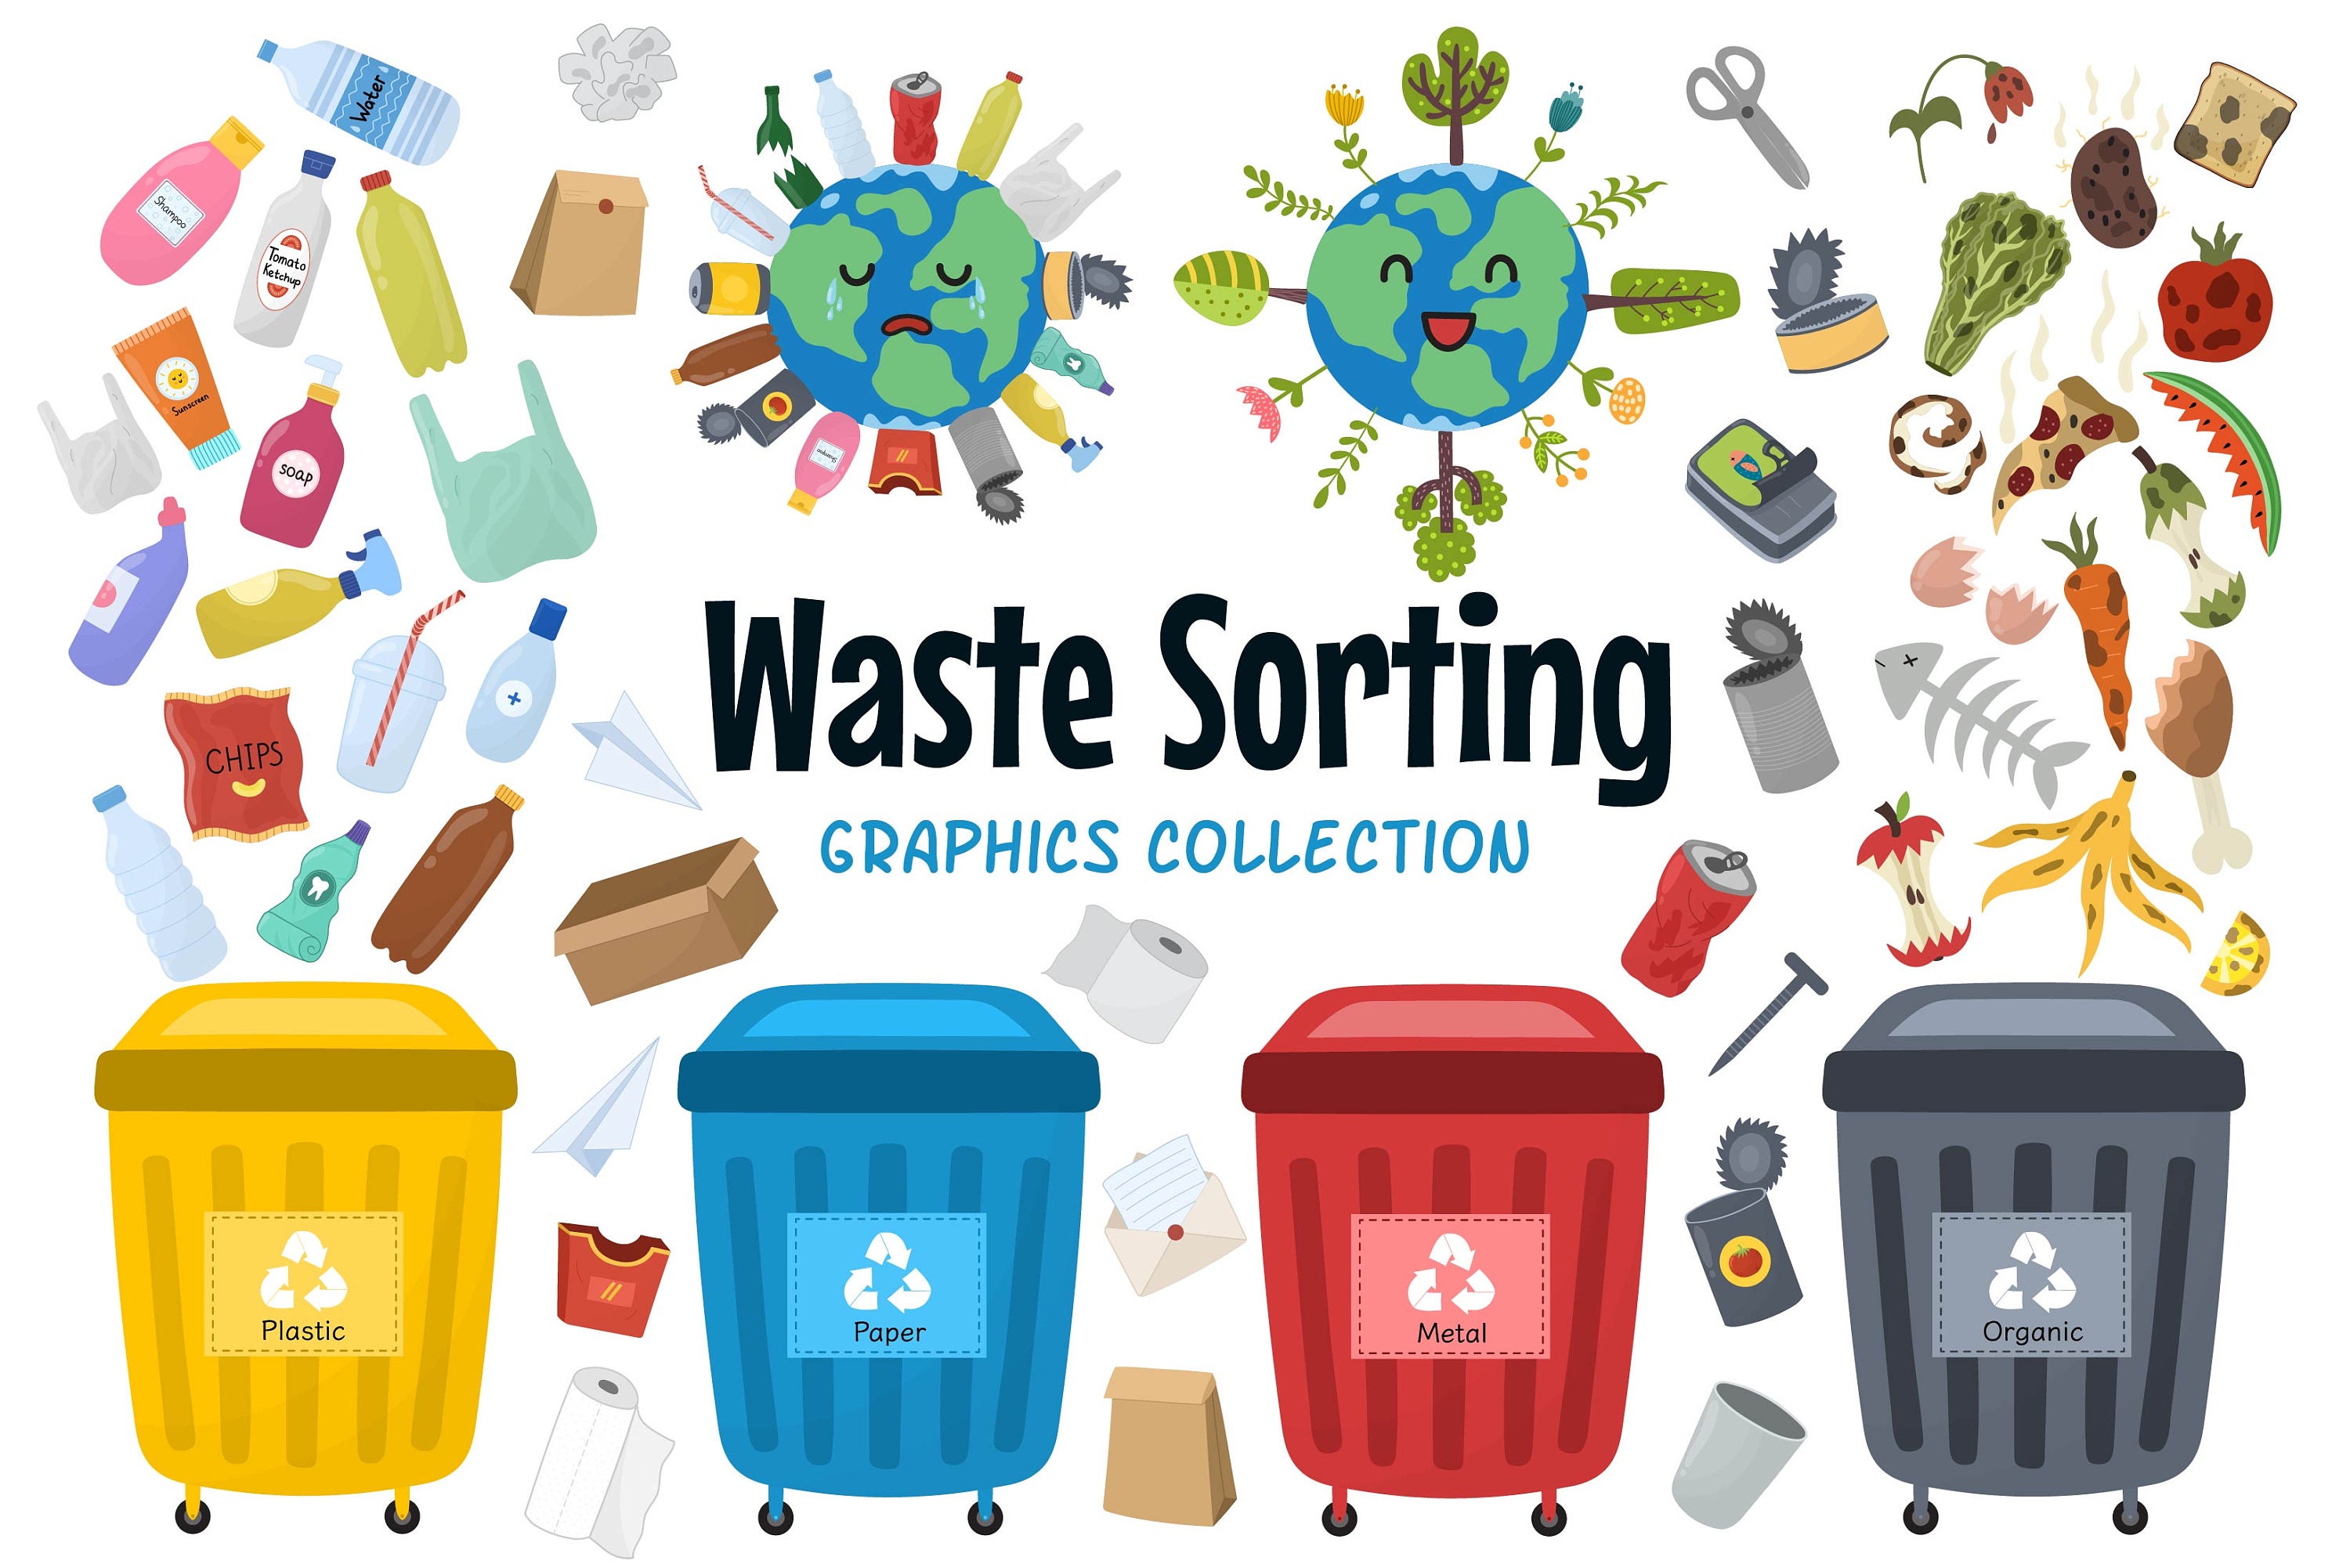 6 Waste Sorting Bins Illustrations - Graphics